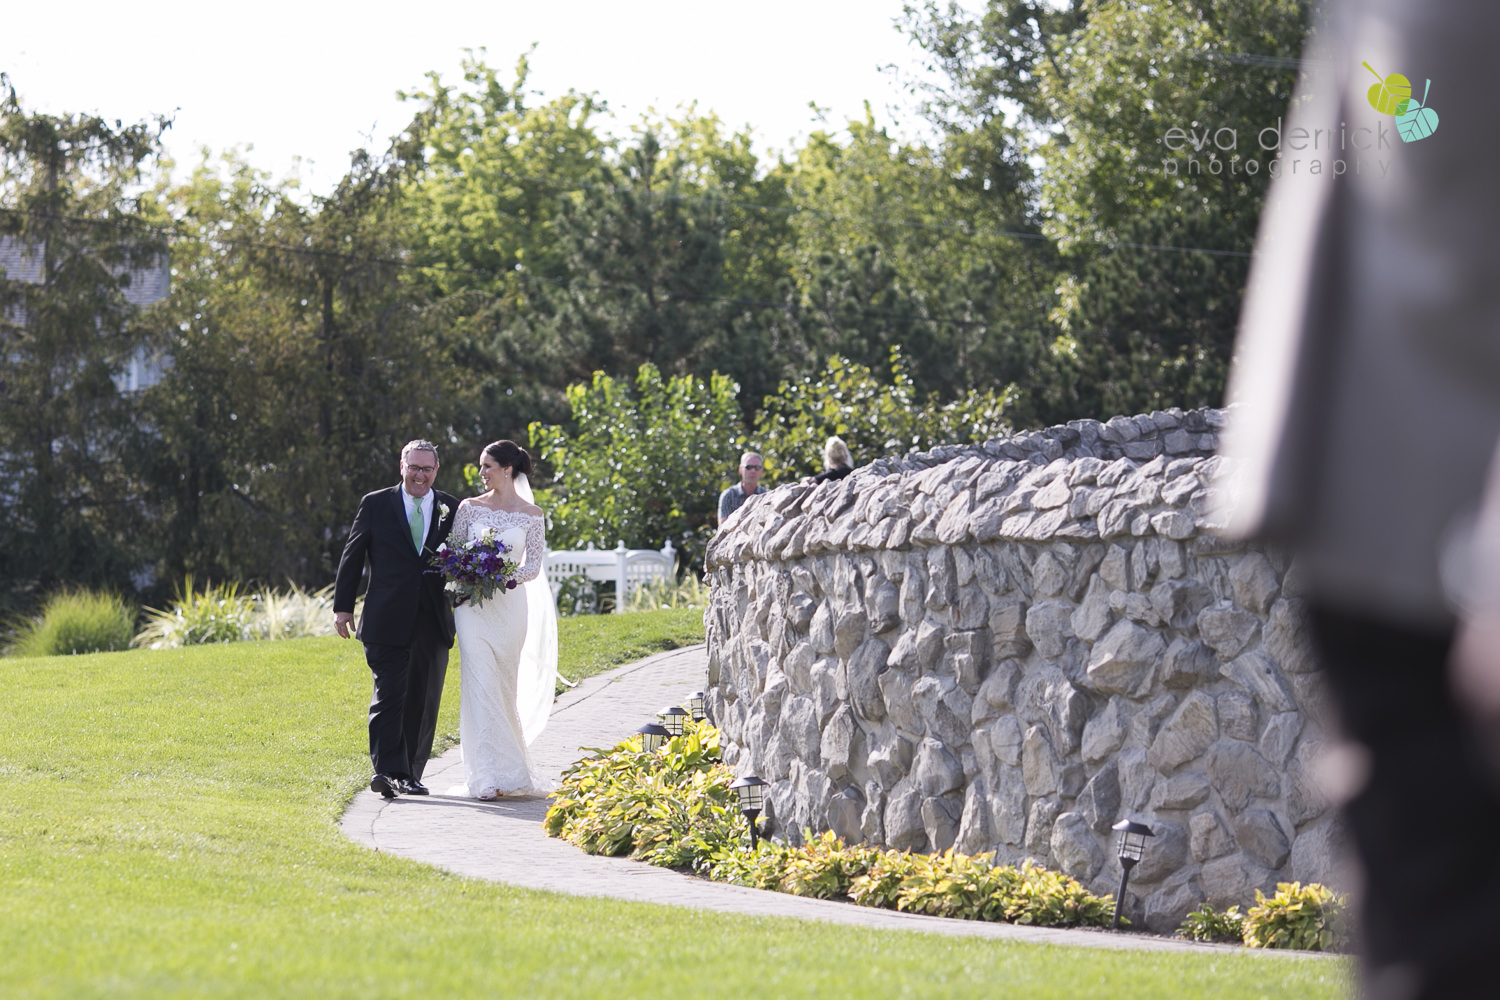 St-Catharines-Wedding-Photographer-Hernder-Estate-Wines-Niagara-Weddings-photography-by-Eva-Derrick-Photography-020.JPG